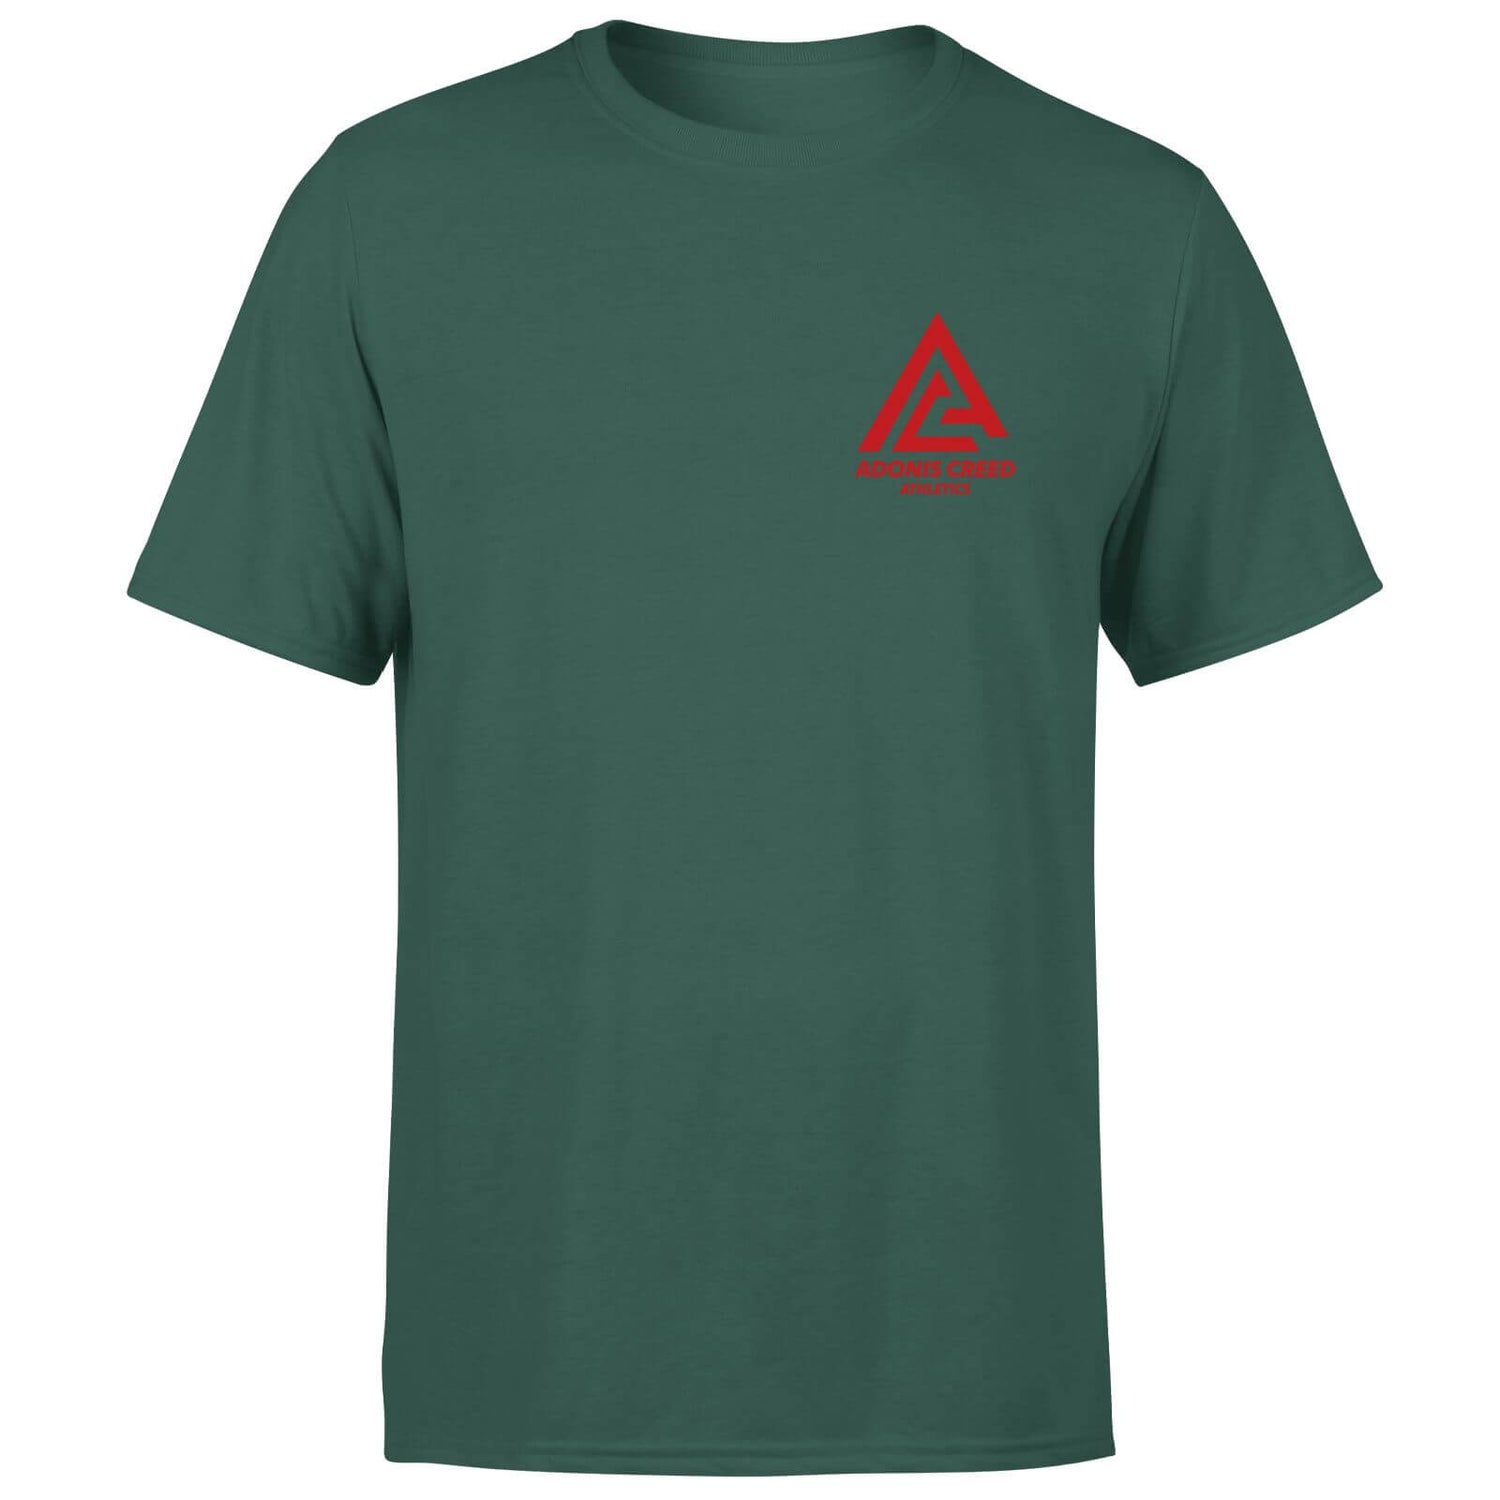 Creed Adonis Creed Athletics Logo Men's T-Shirt - Green